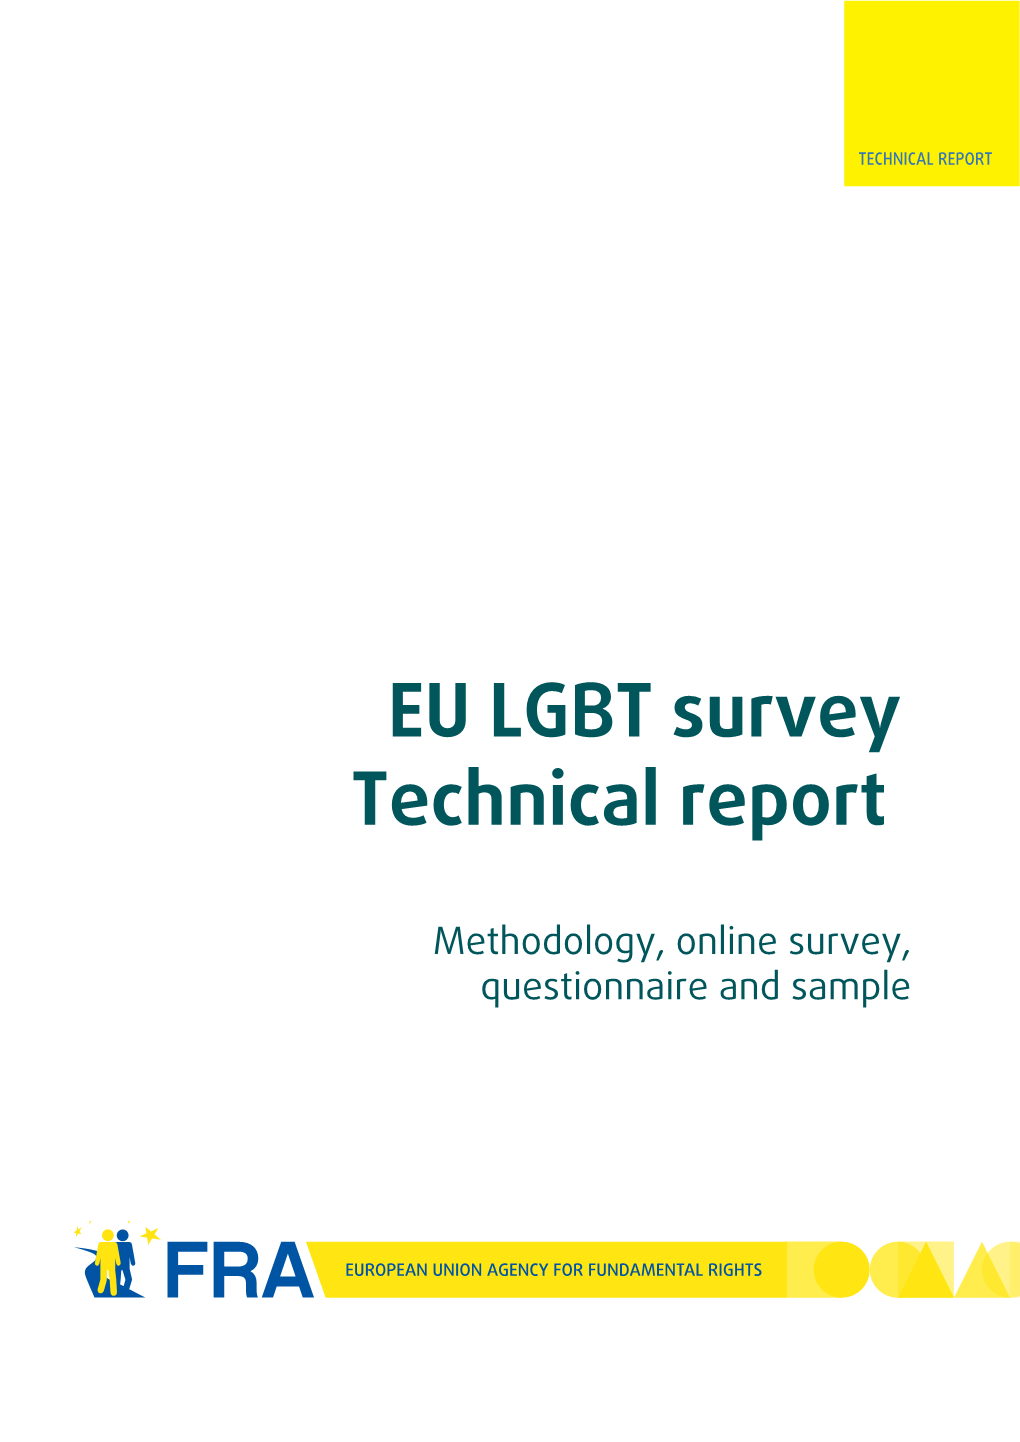 EU LGBT Survey Technical Report